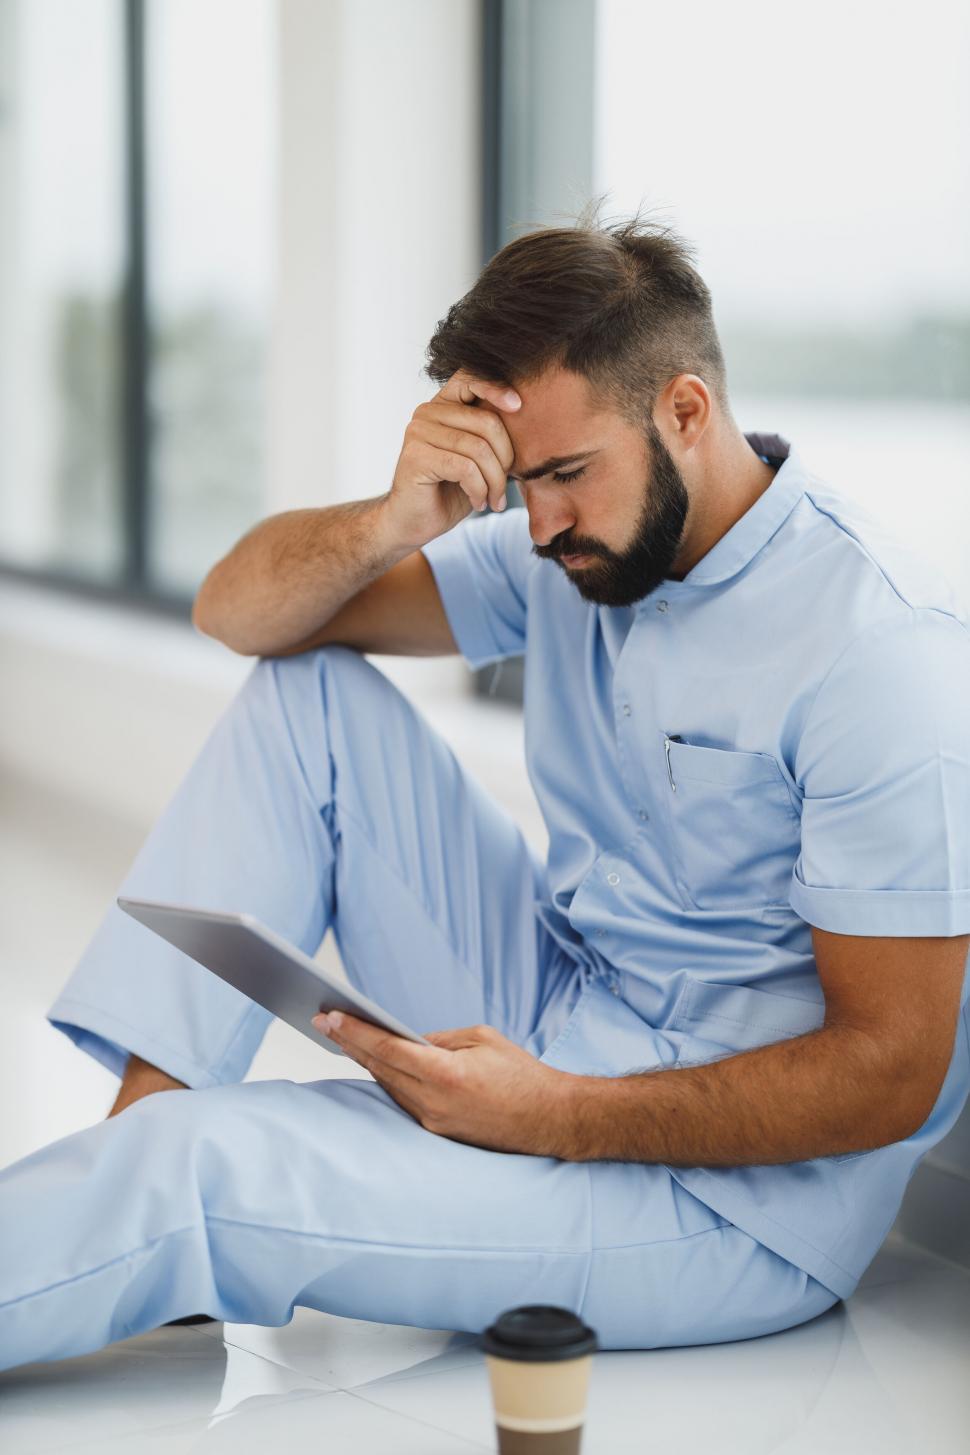 Free Image of Male nurse feeling stressed in hospital corridor 